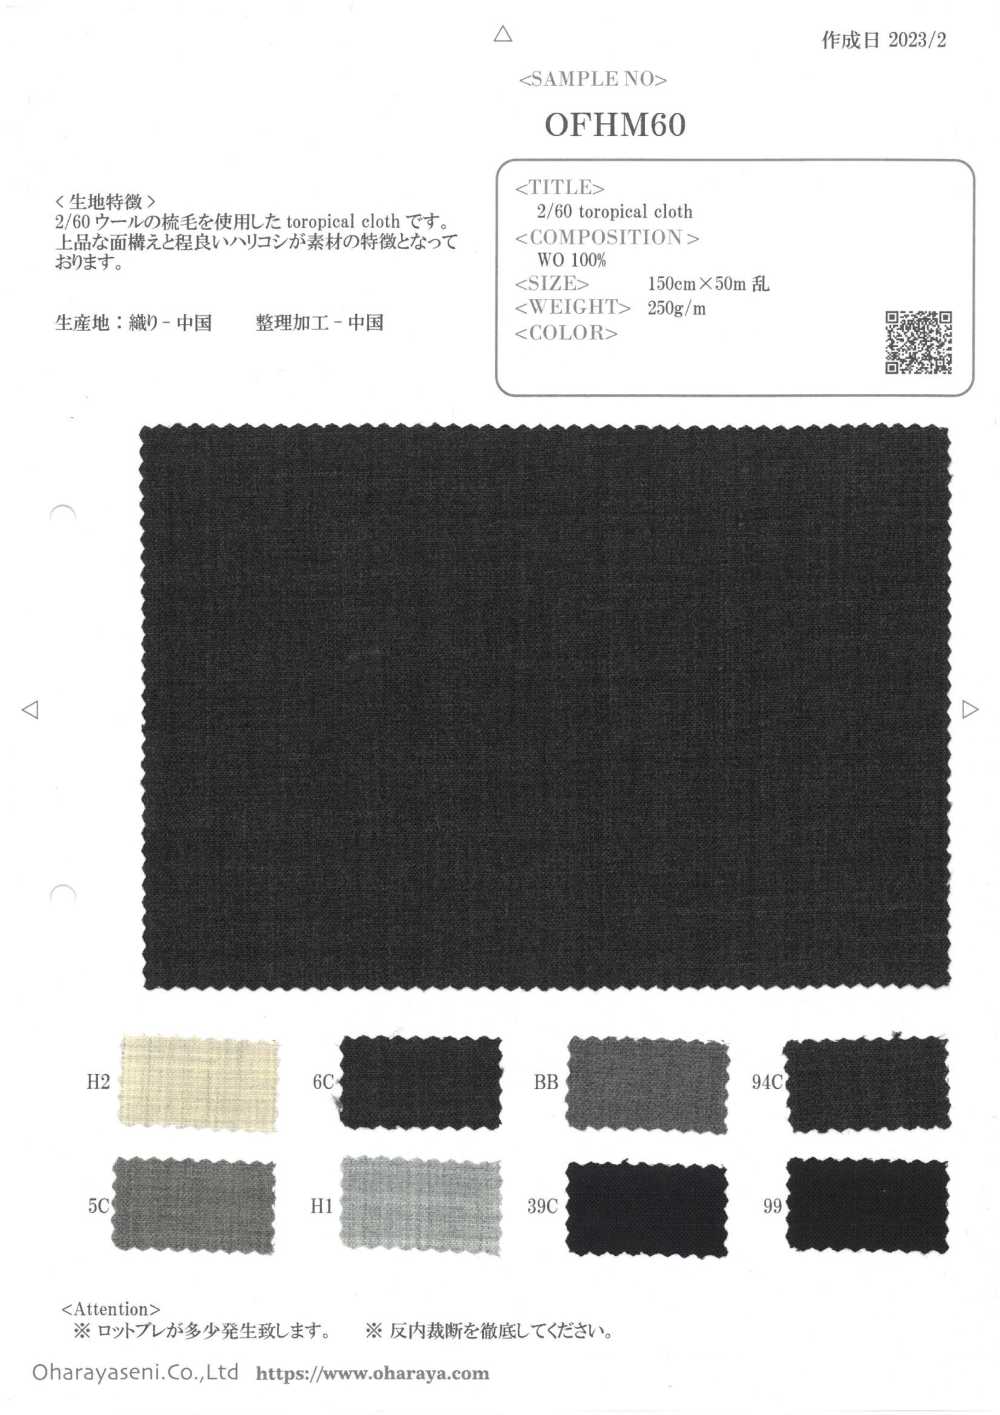 OFHM60 2/60 Tela Tropical[Fabrica Textil] Oharayaseni